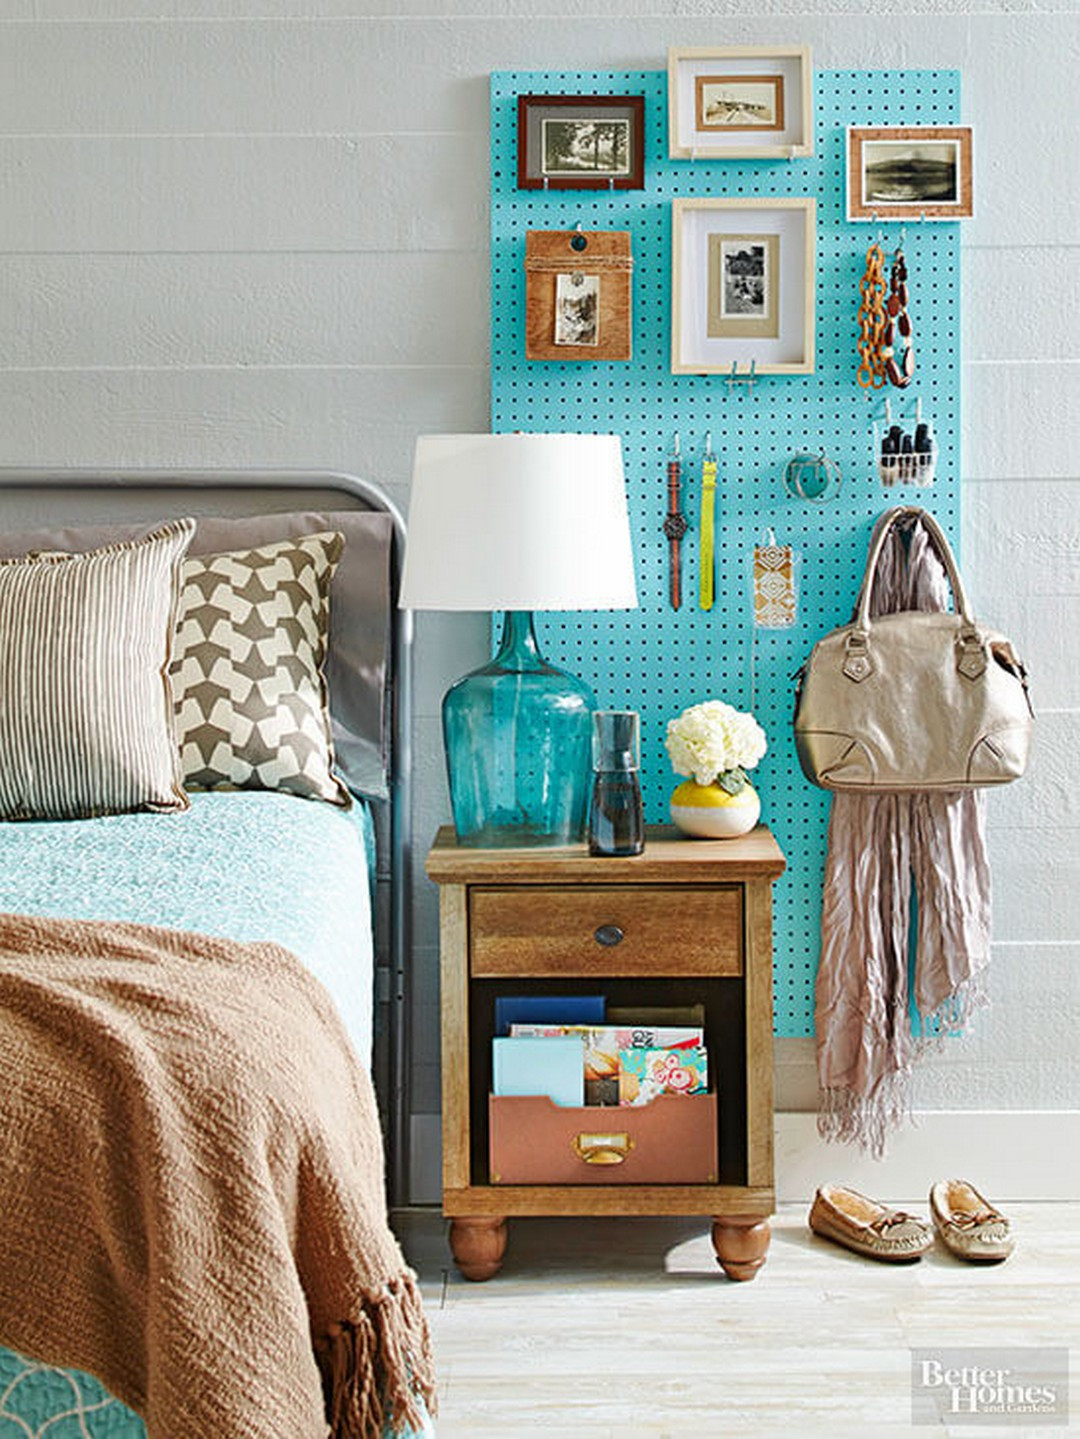 DIY Small Room Organization
 38 Smart Bedroom Organization Ideas A Great Way To